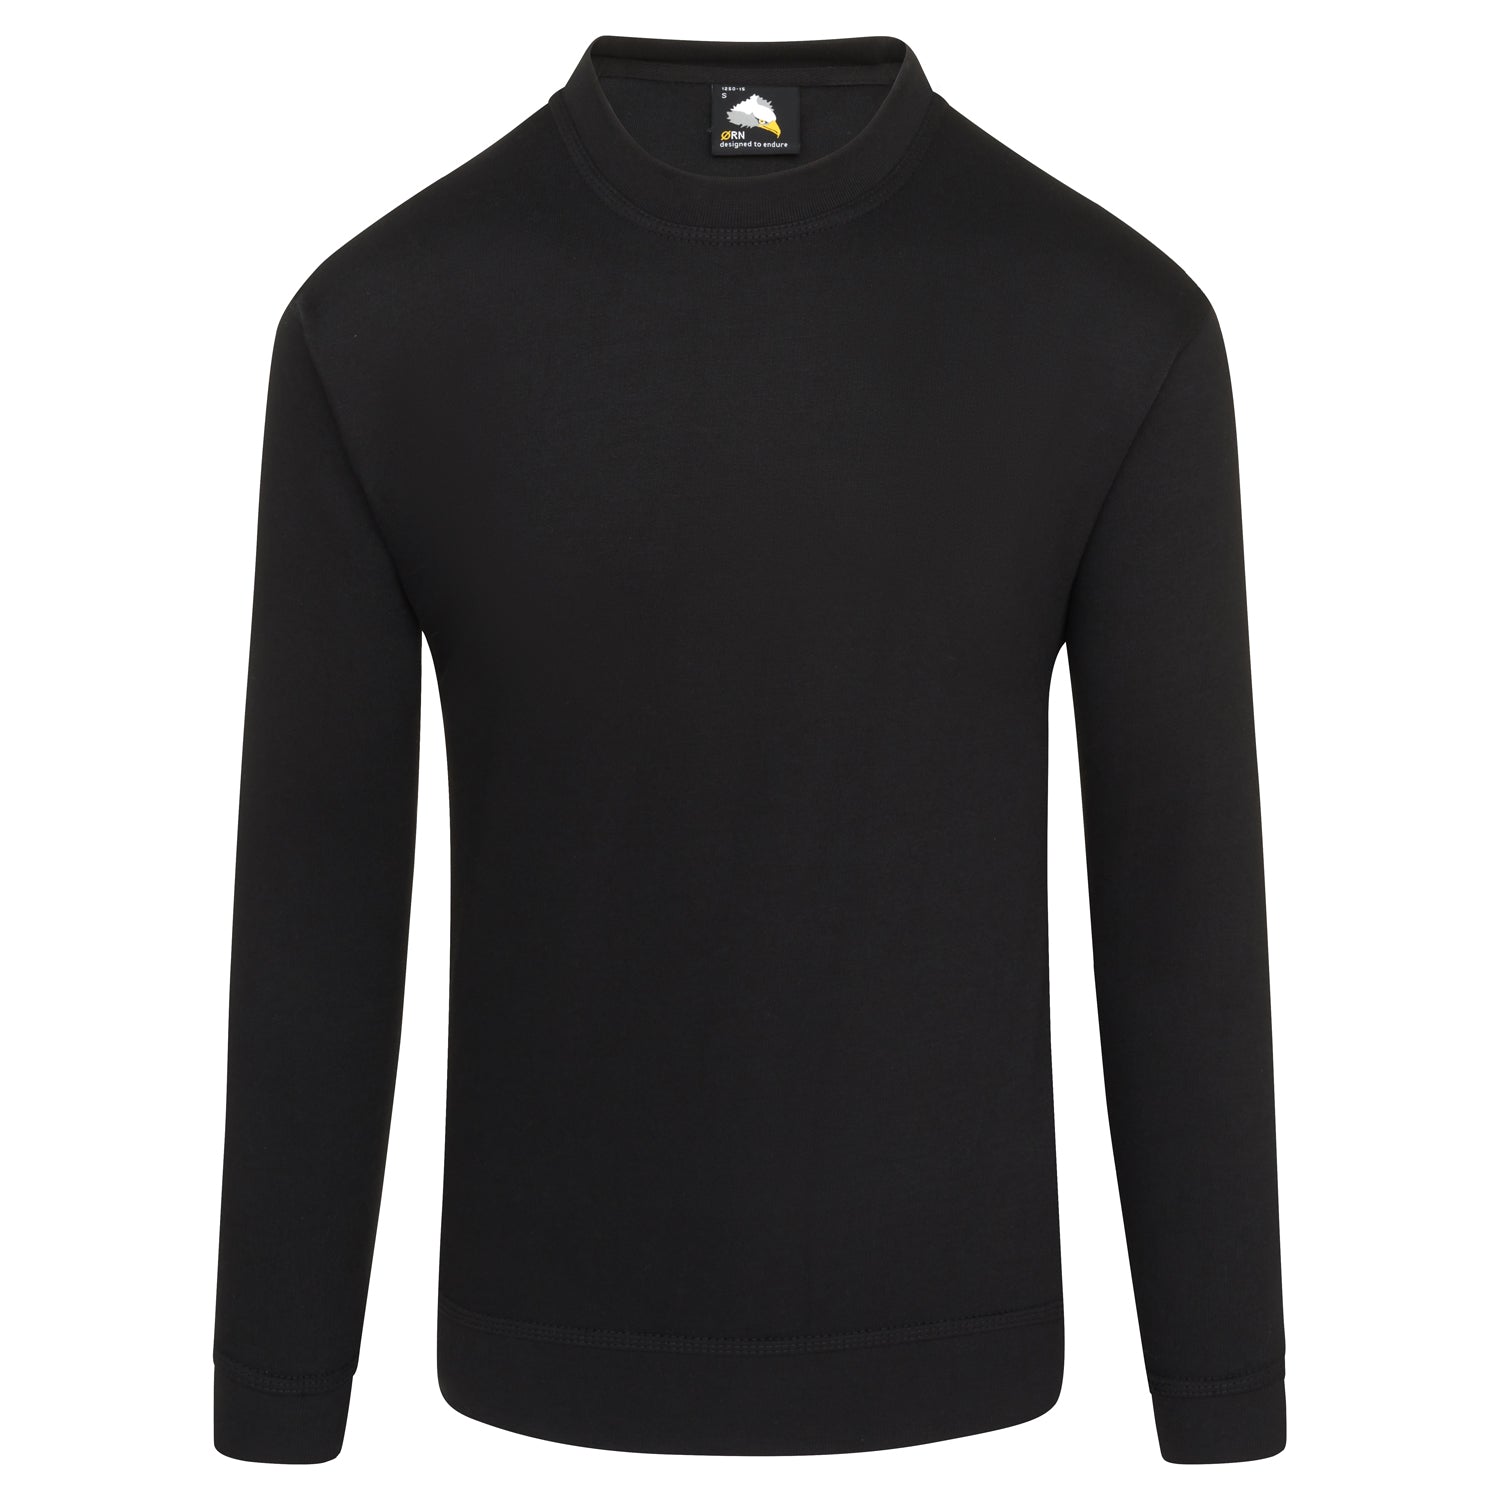 ORN Kite Sweatshirt - Black